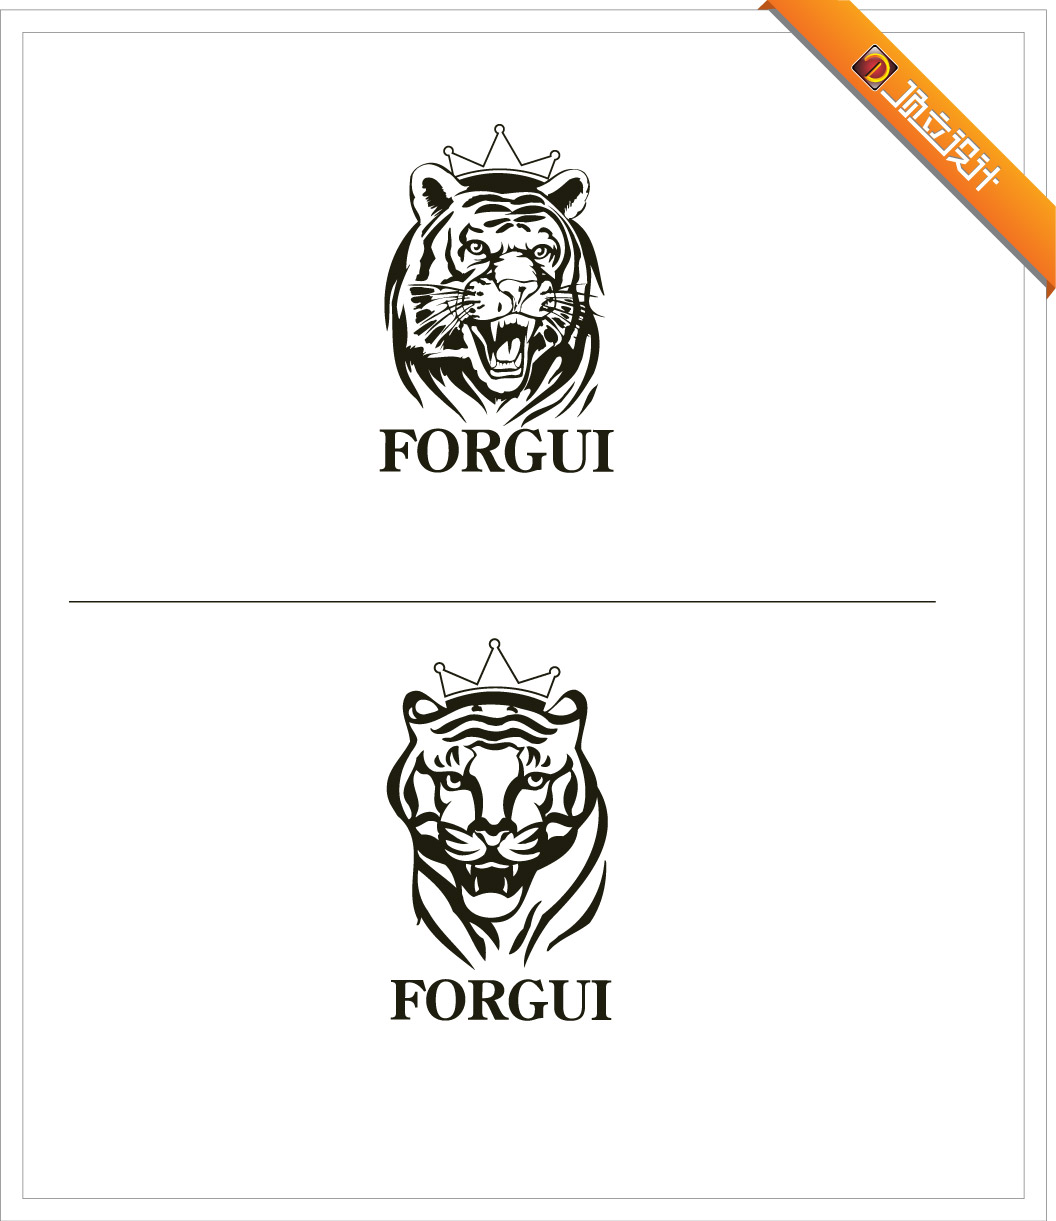 forgui设计一个虎头形象做logo